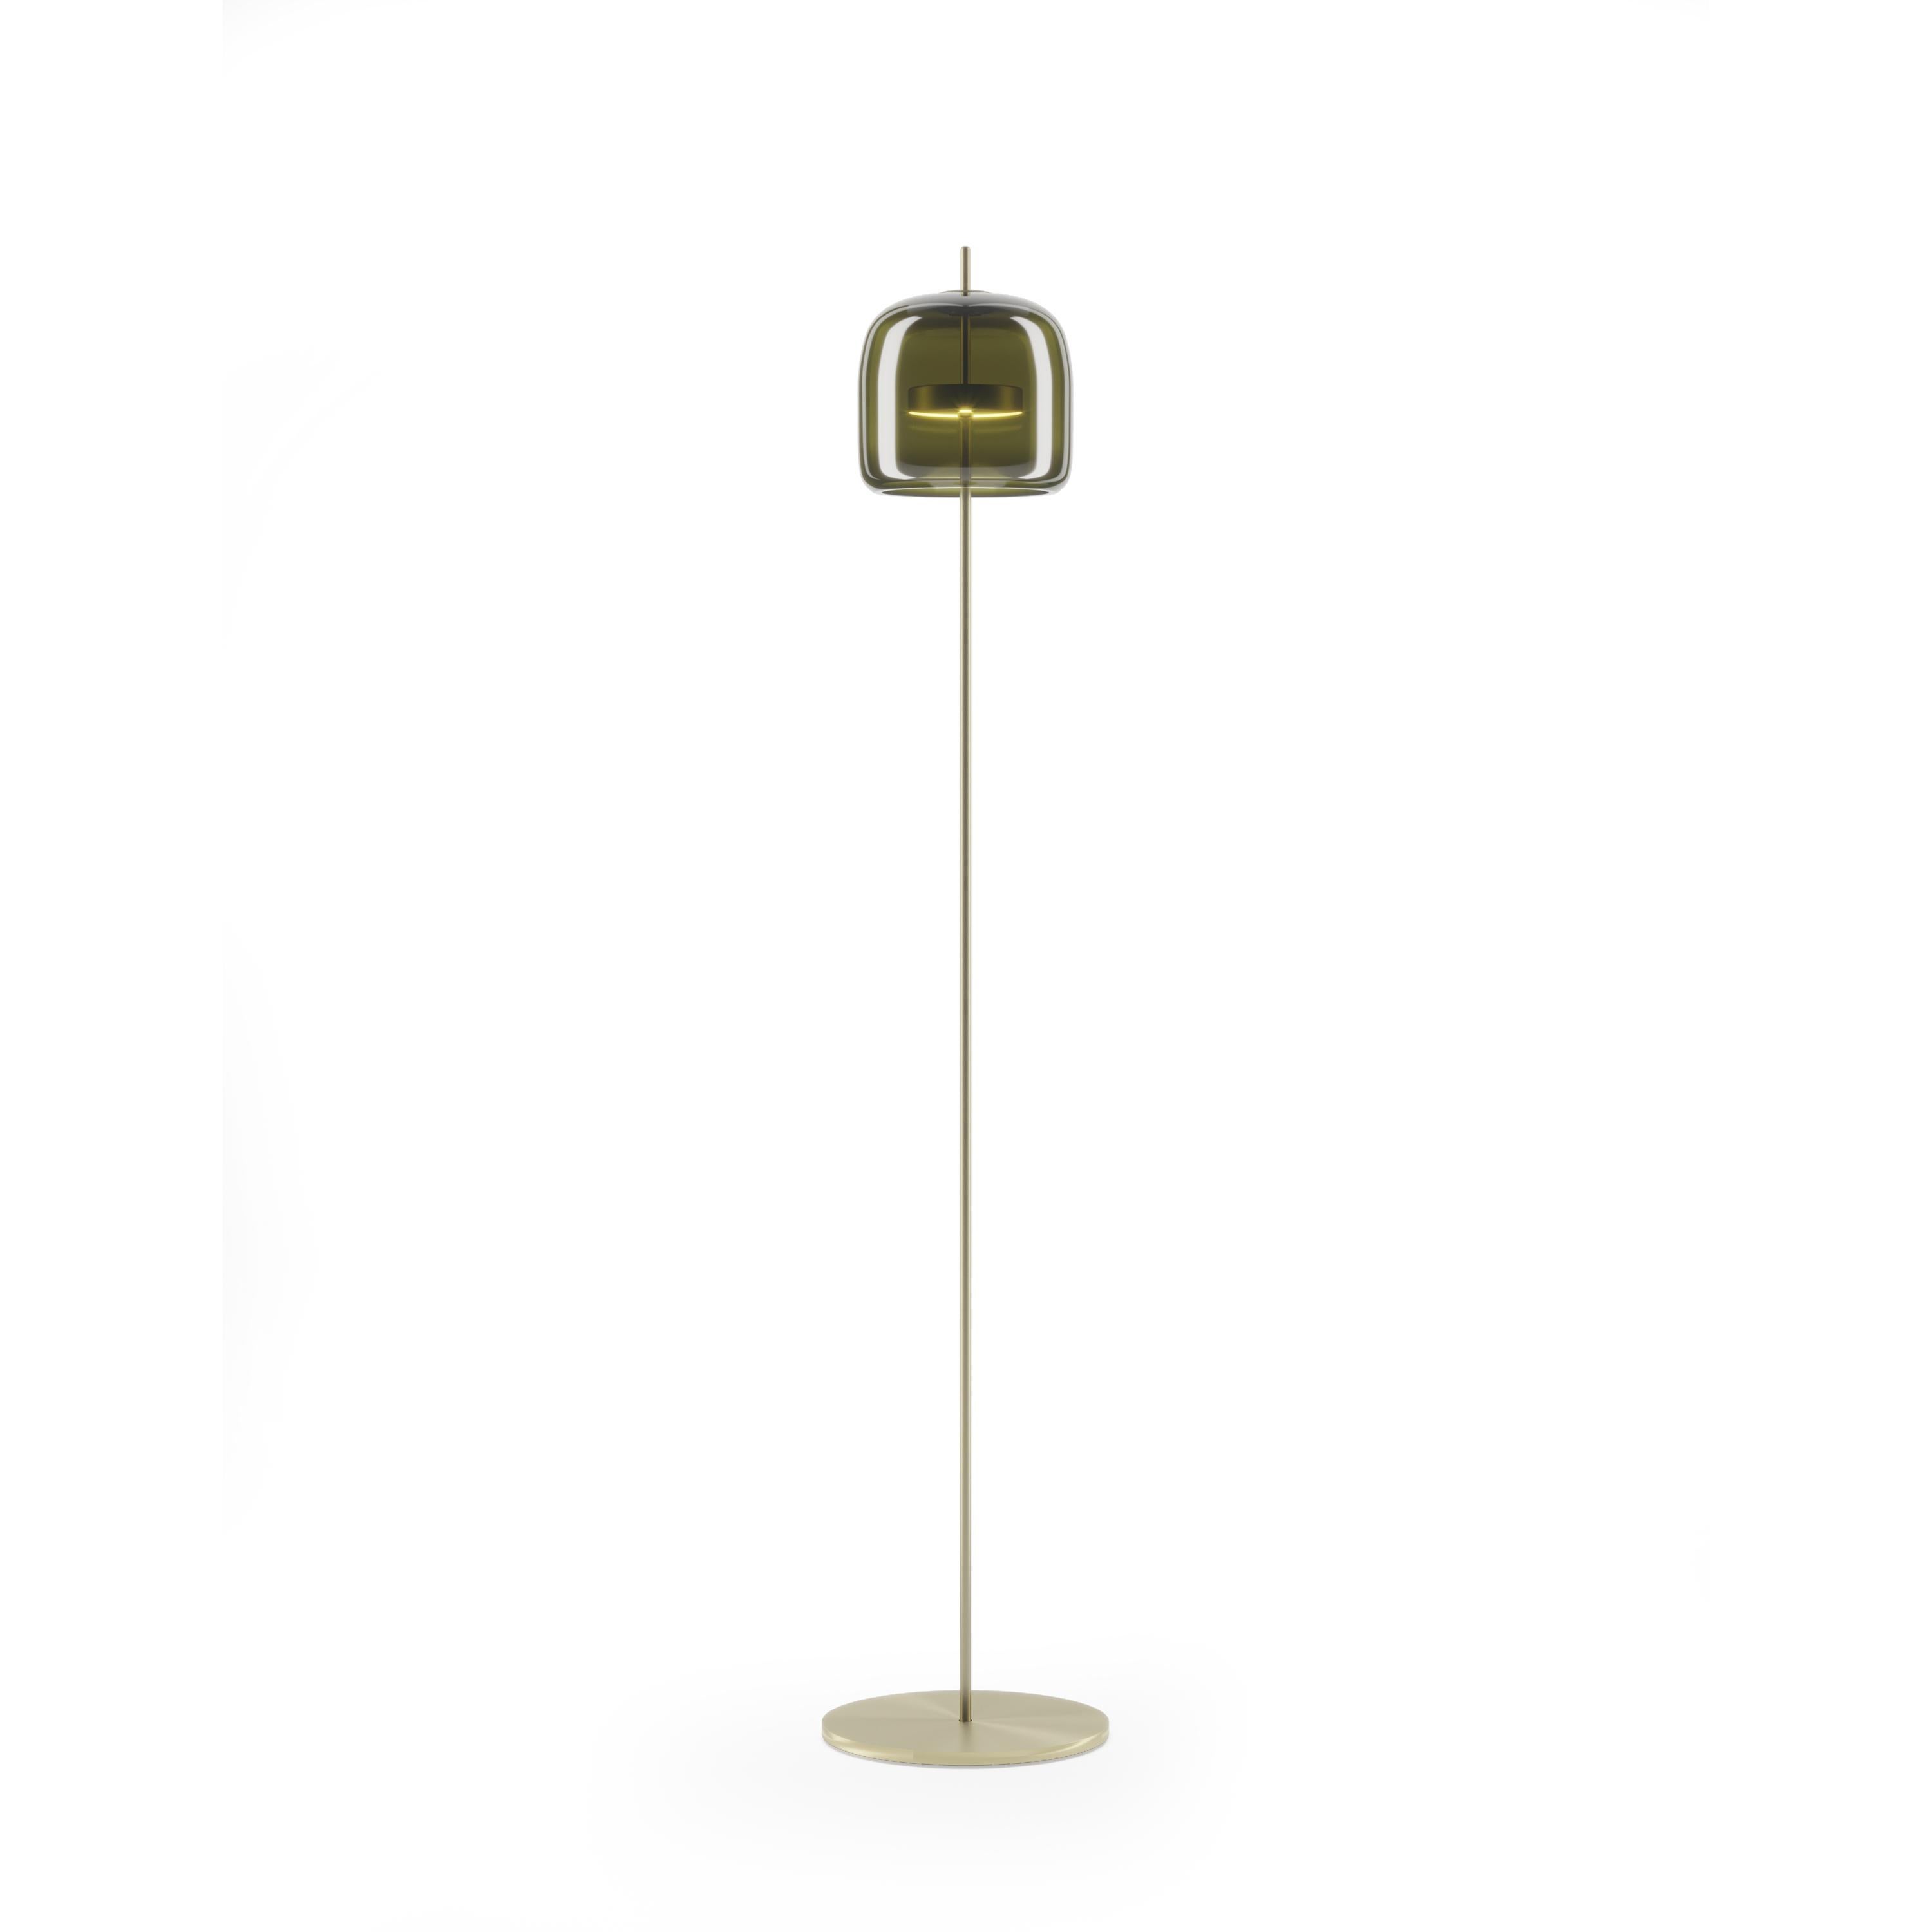 Modern Vistosi Jube Floor Lamp in Old Green Transparent Glass And Matt Gold Finish For Sale